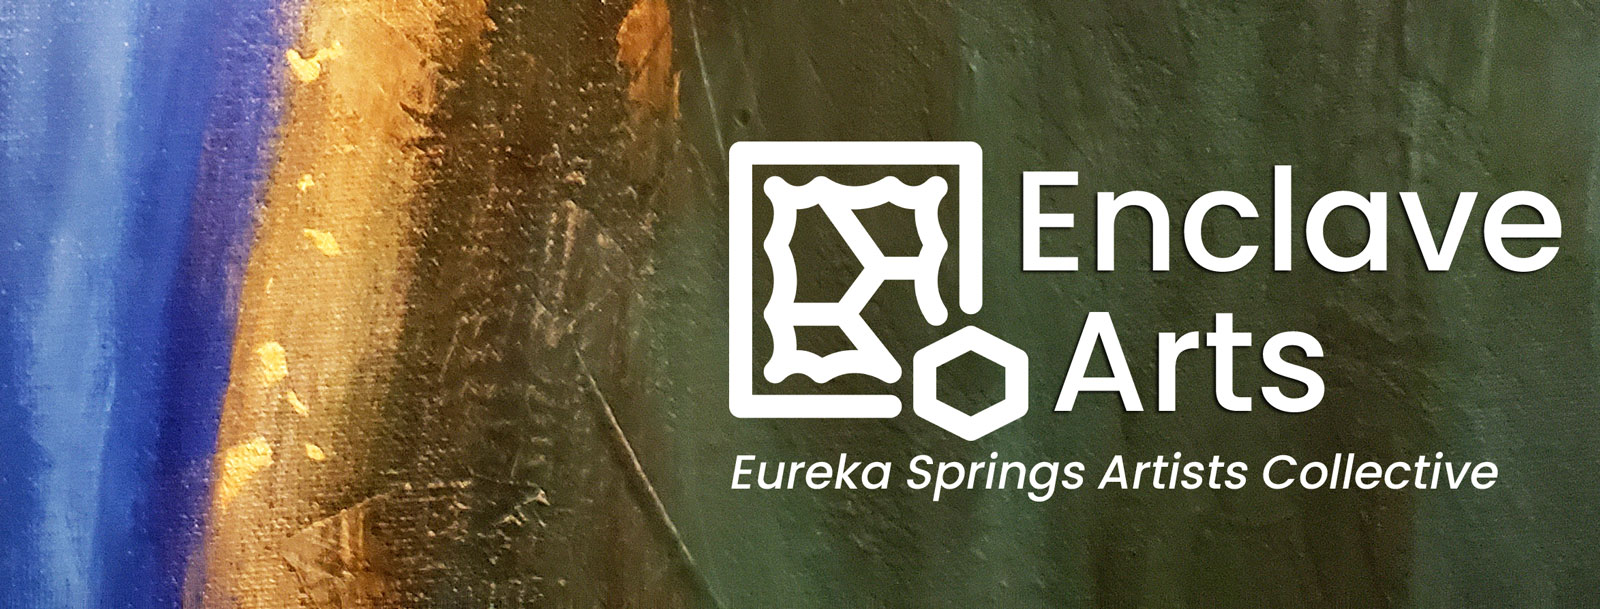 Eureka Springs Artist Collective - Enclave Arts